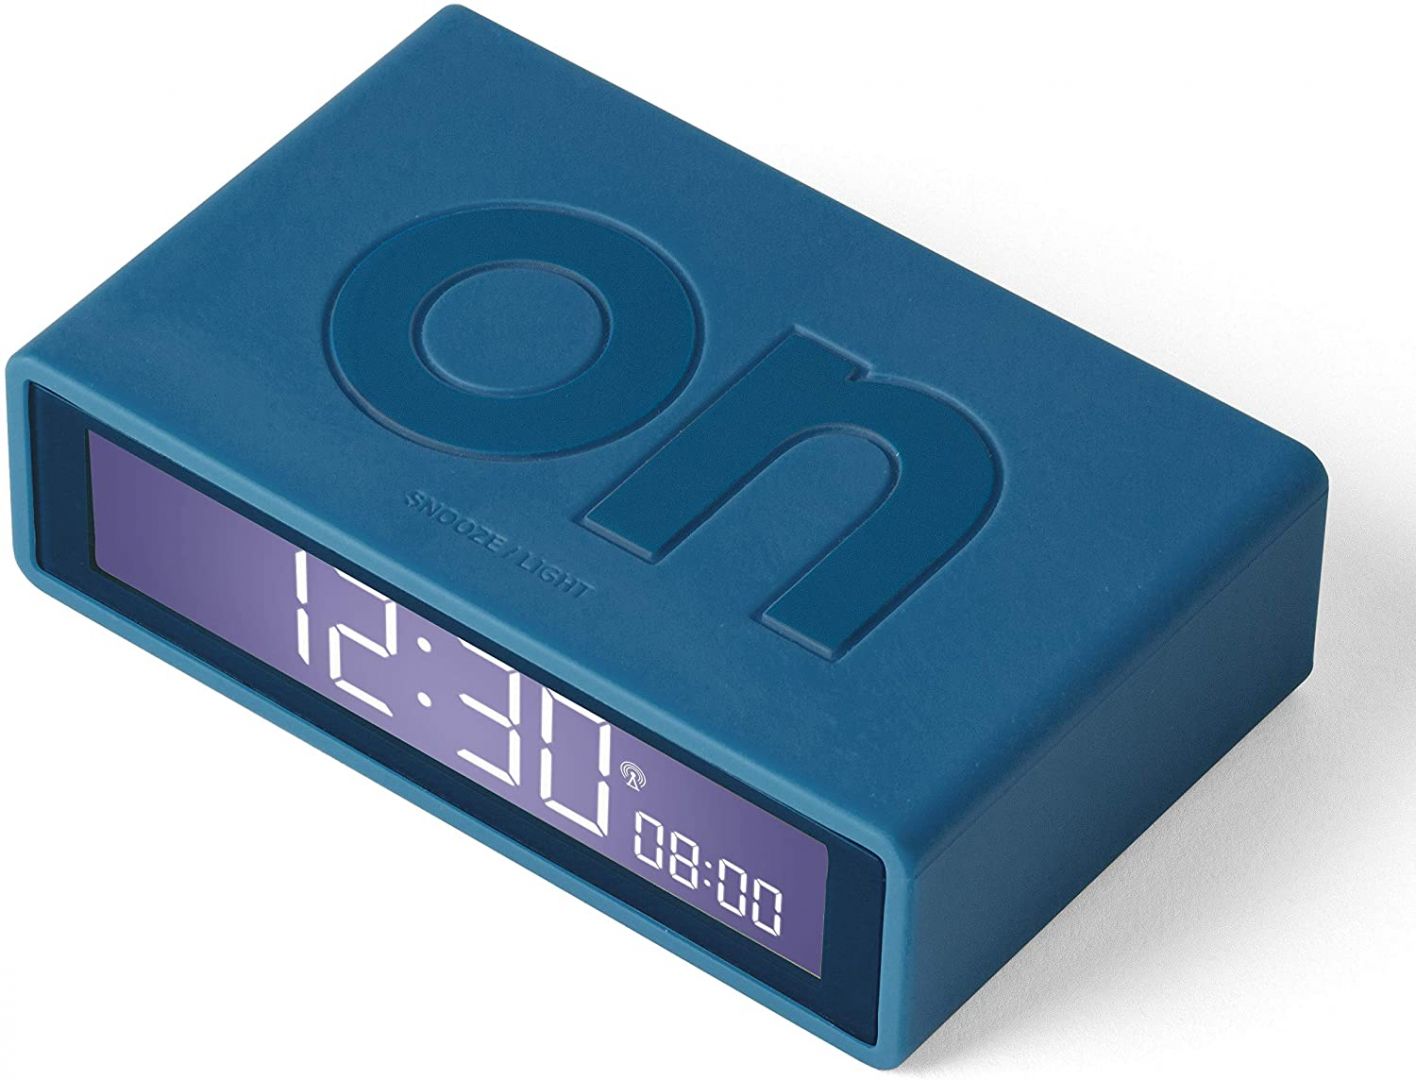 Hi-fi Lexon Flip+ LCD Alarm Clock Rubber Duck Blue